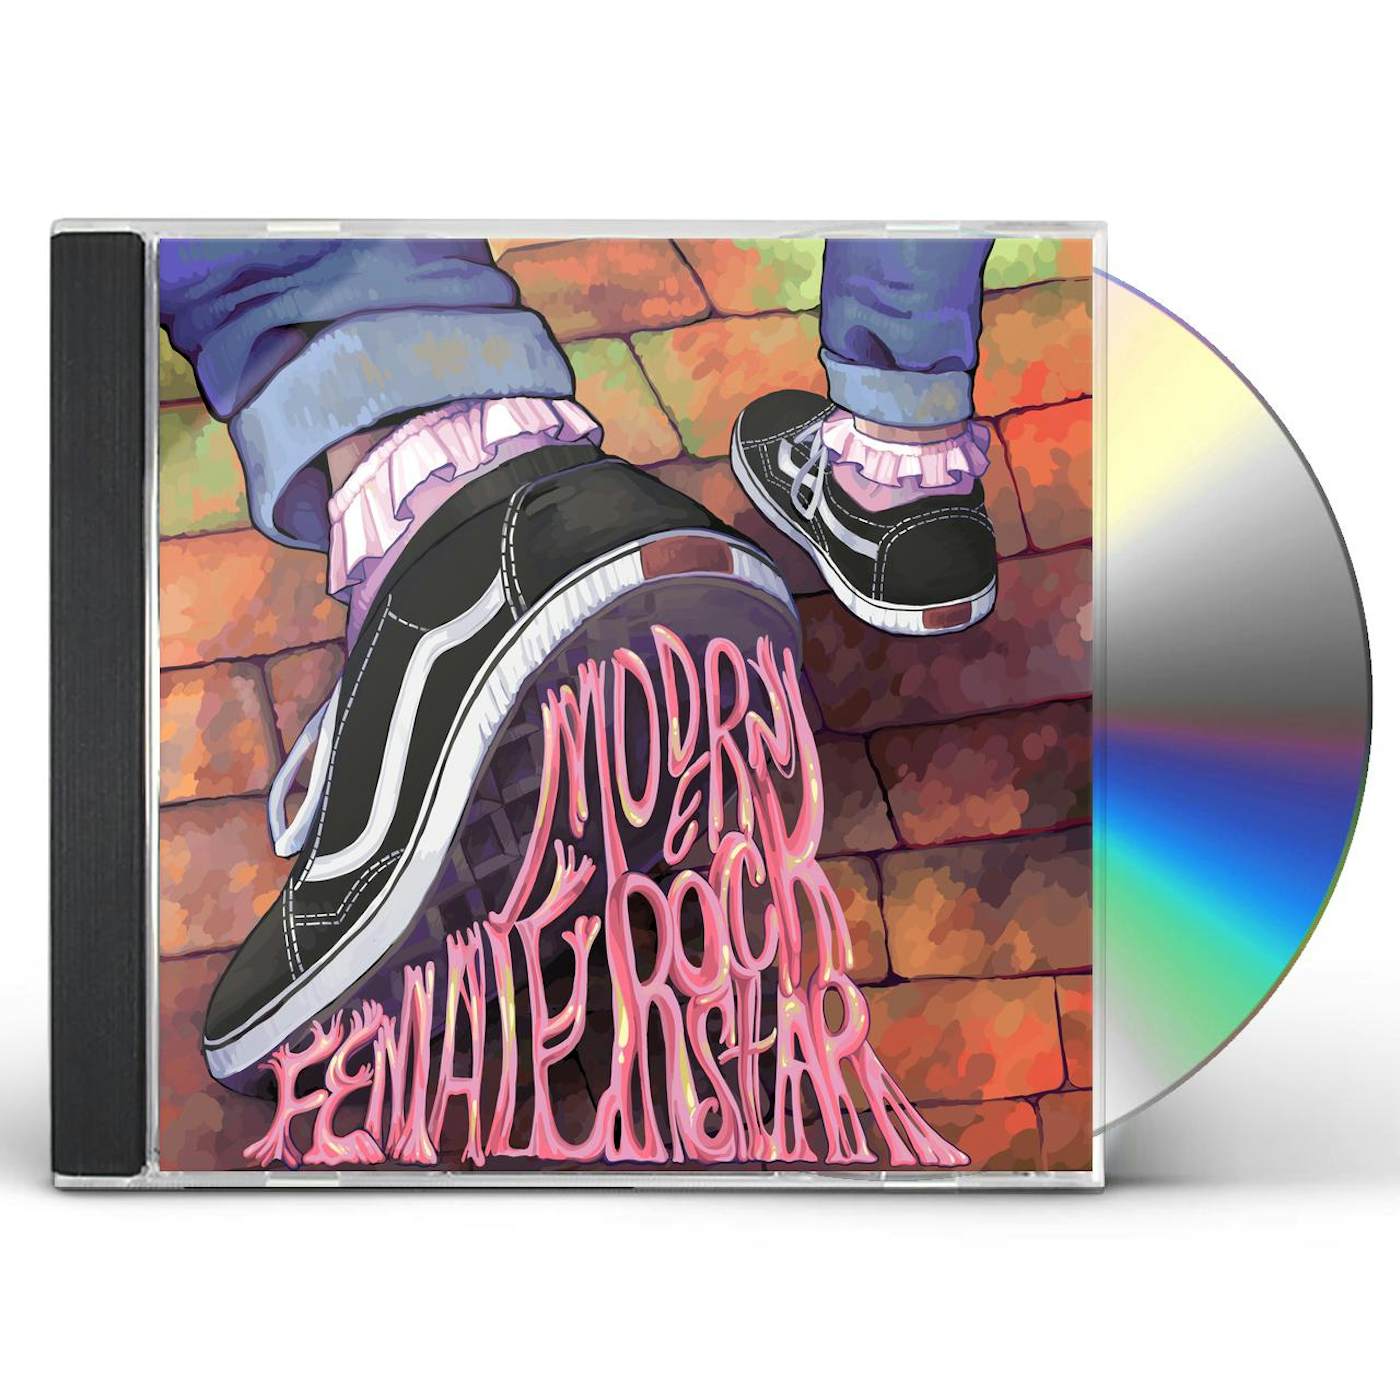 The Sonder Bombs MODERN FEMALE ROCKSTAR CD